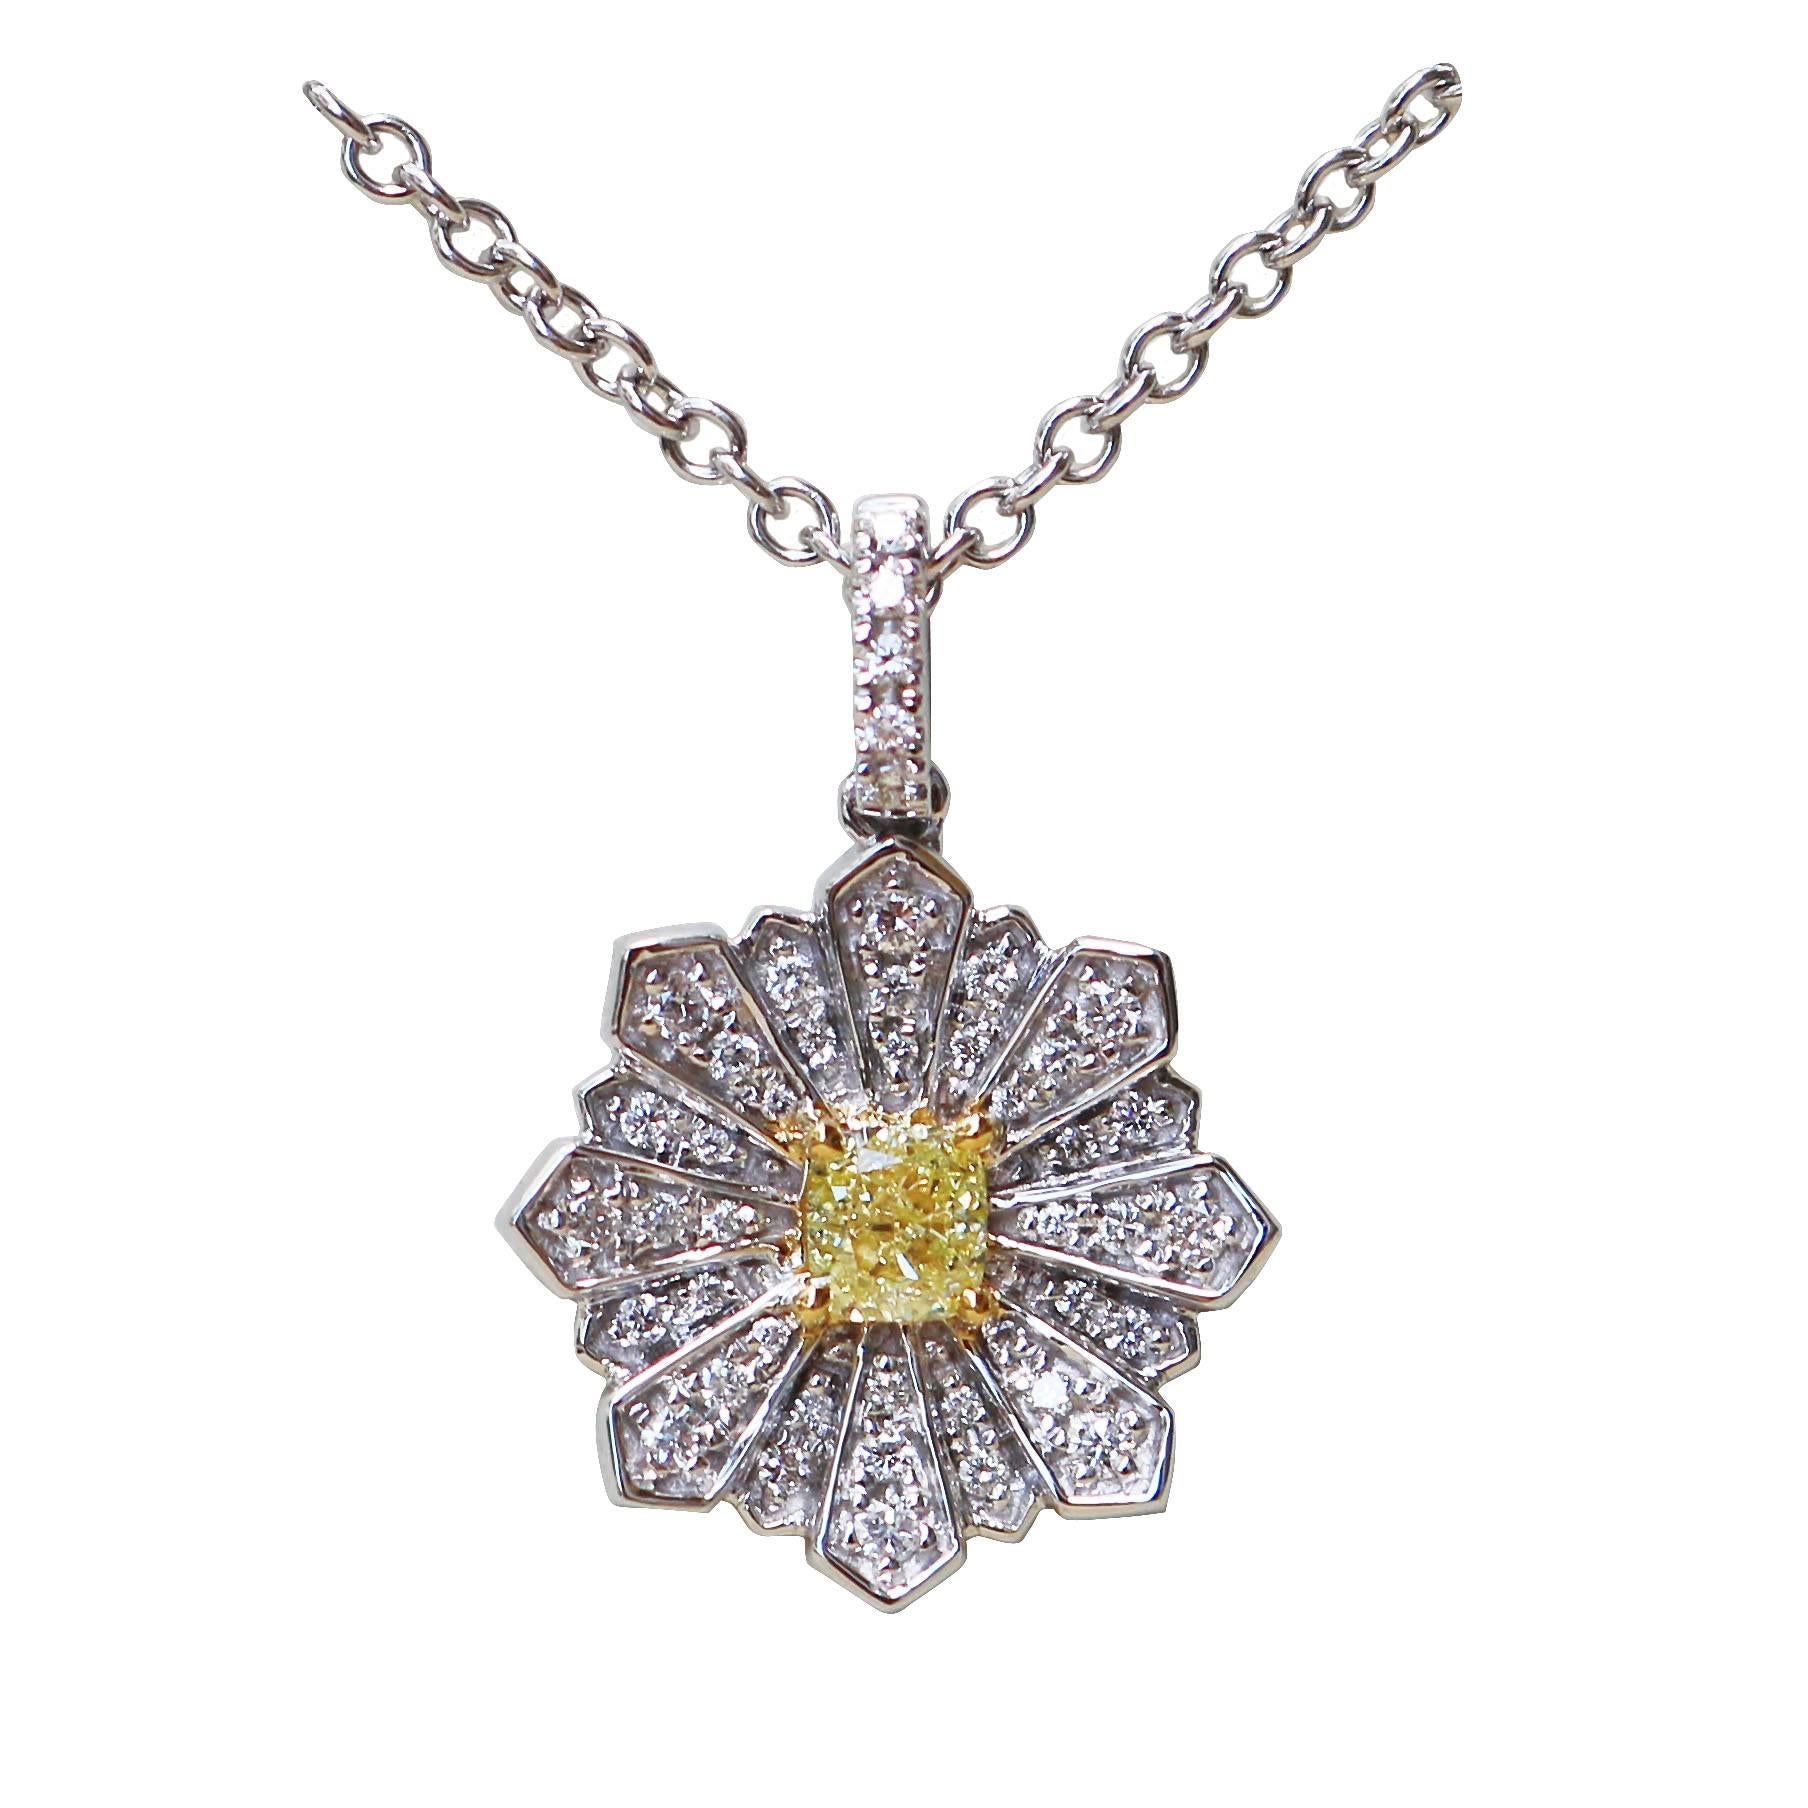 Flower Pendant with a 0.24 Carat Yellow Diamond and 0.24 Carat of White Diamond